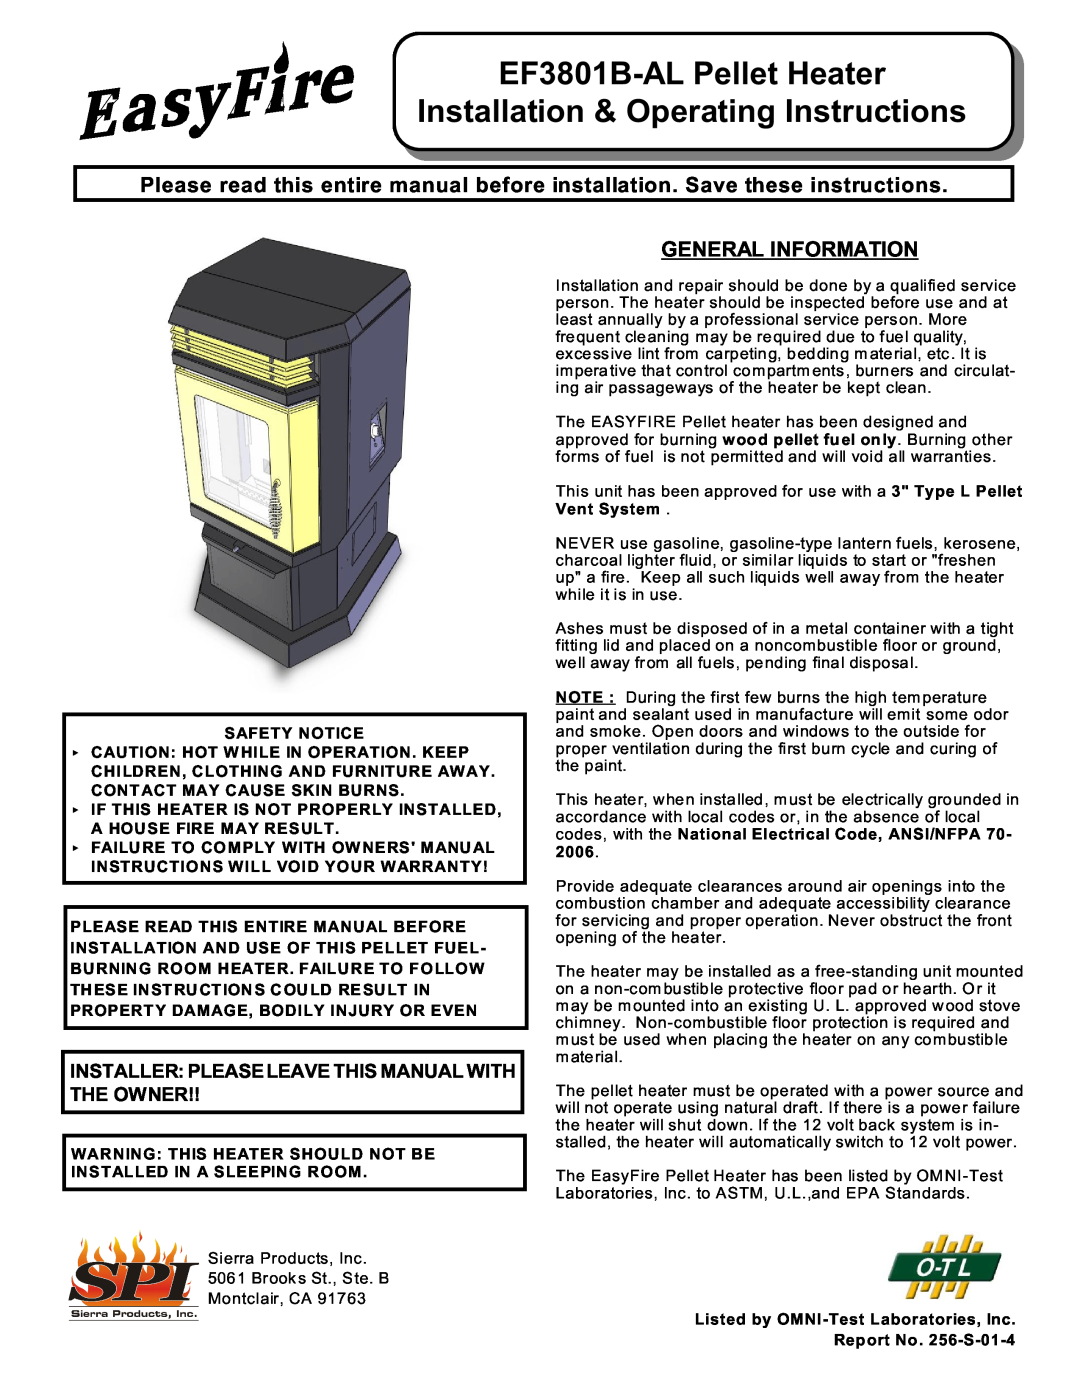 Sierra Products EF-3801B-AL owner manual General Information, EF3801B-ALPellet Heater, The Owner 